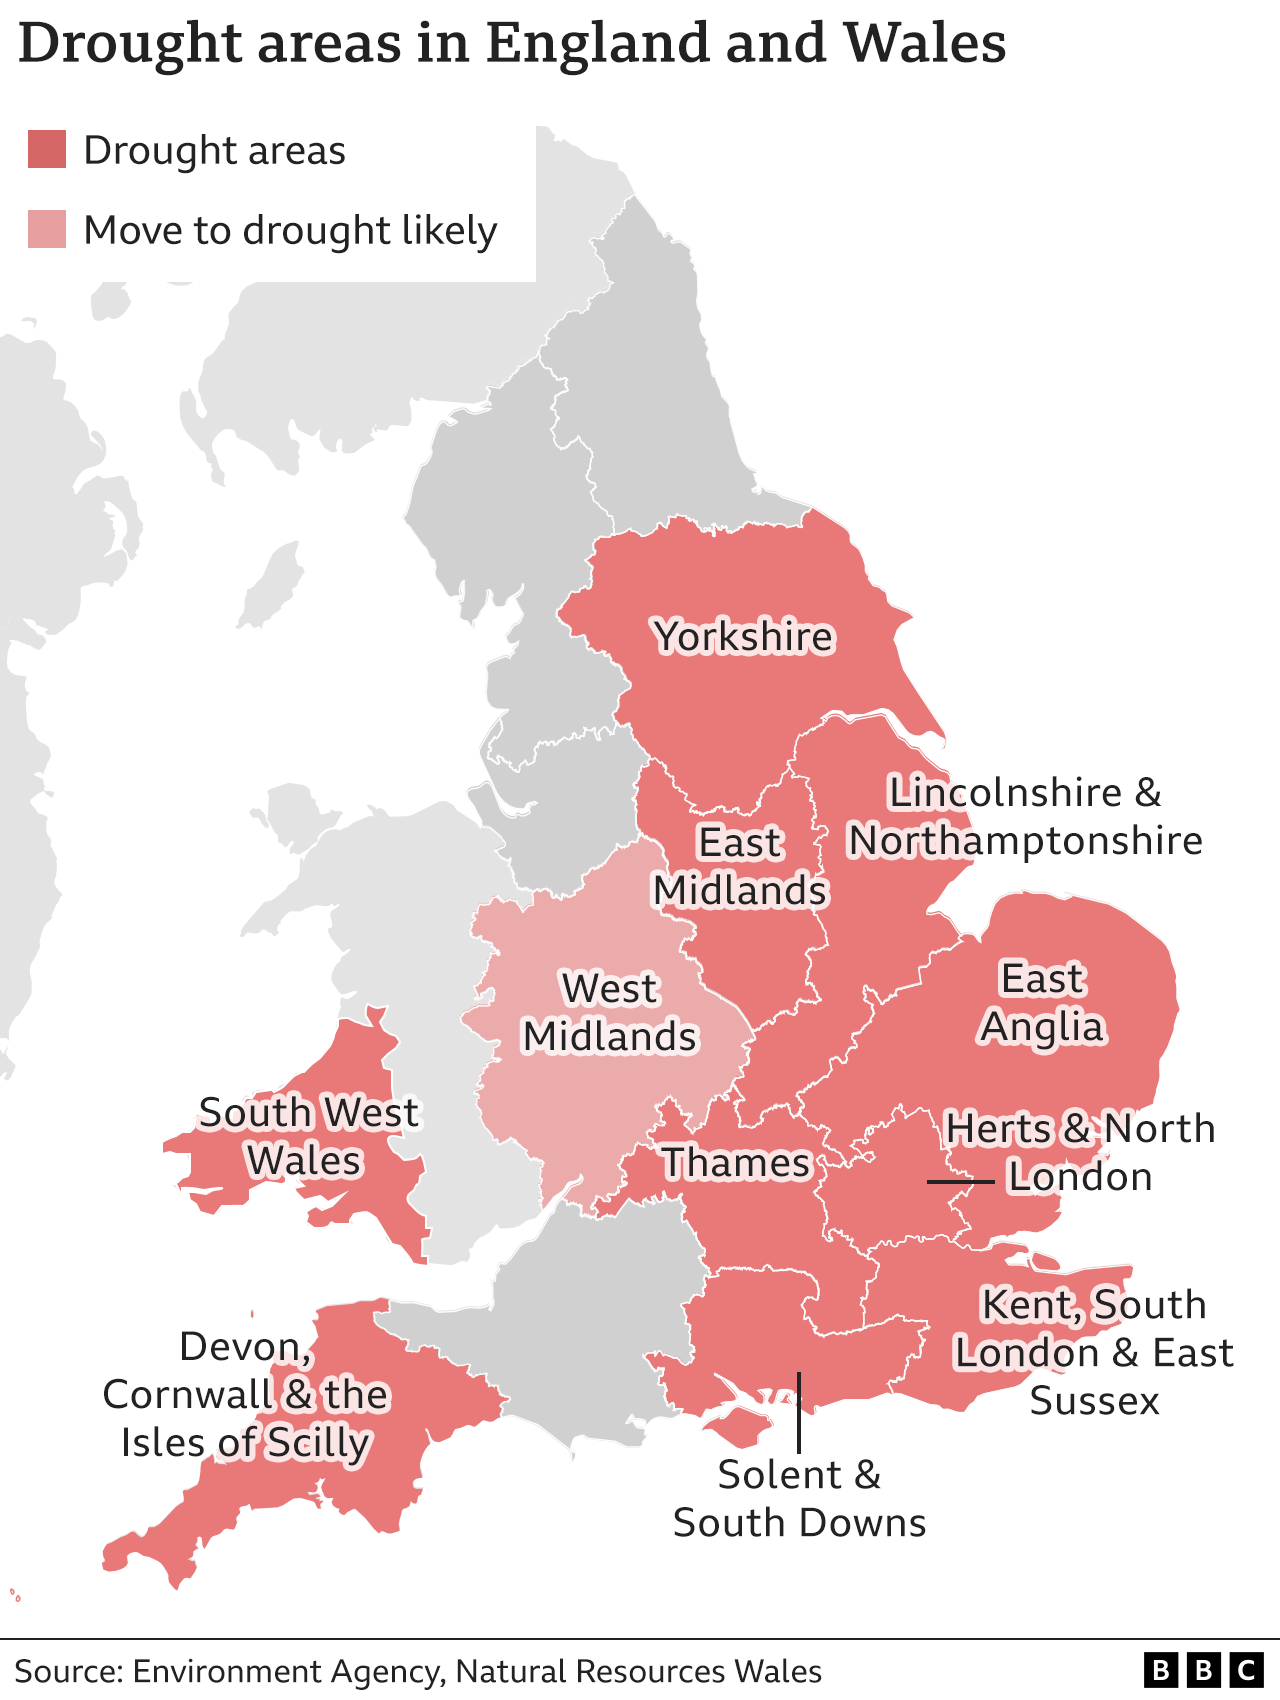 Drought status map